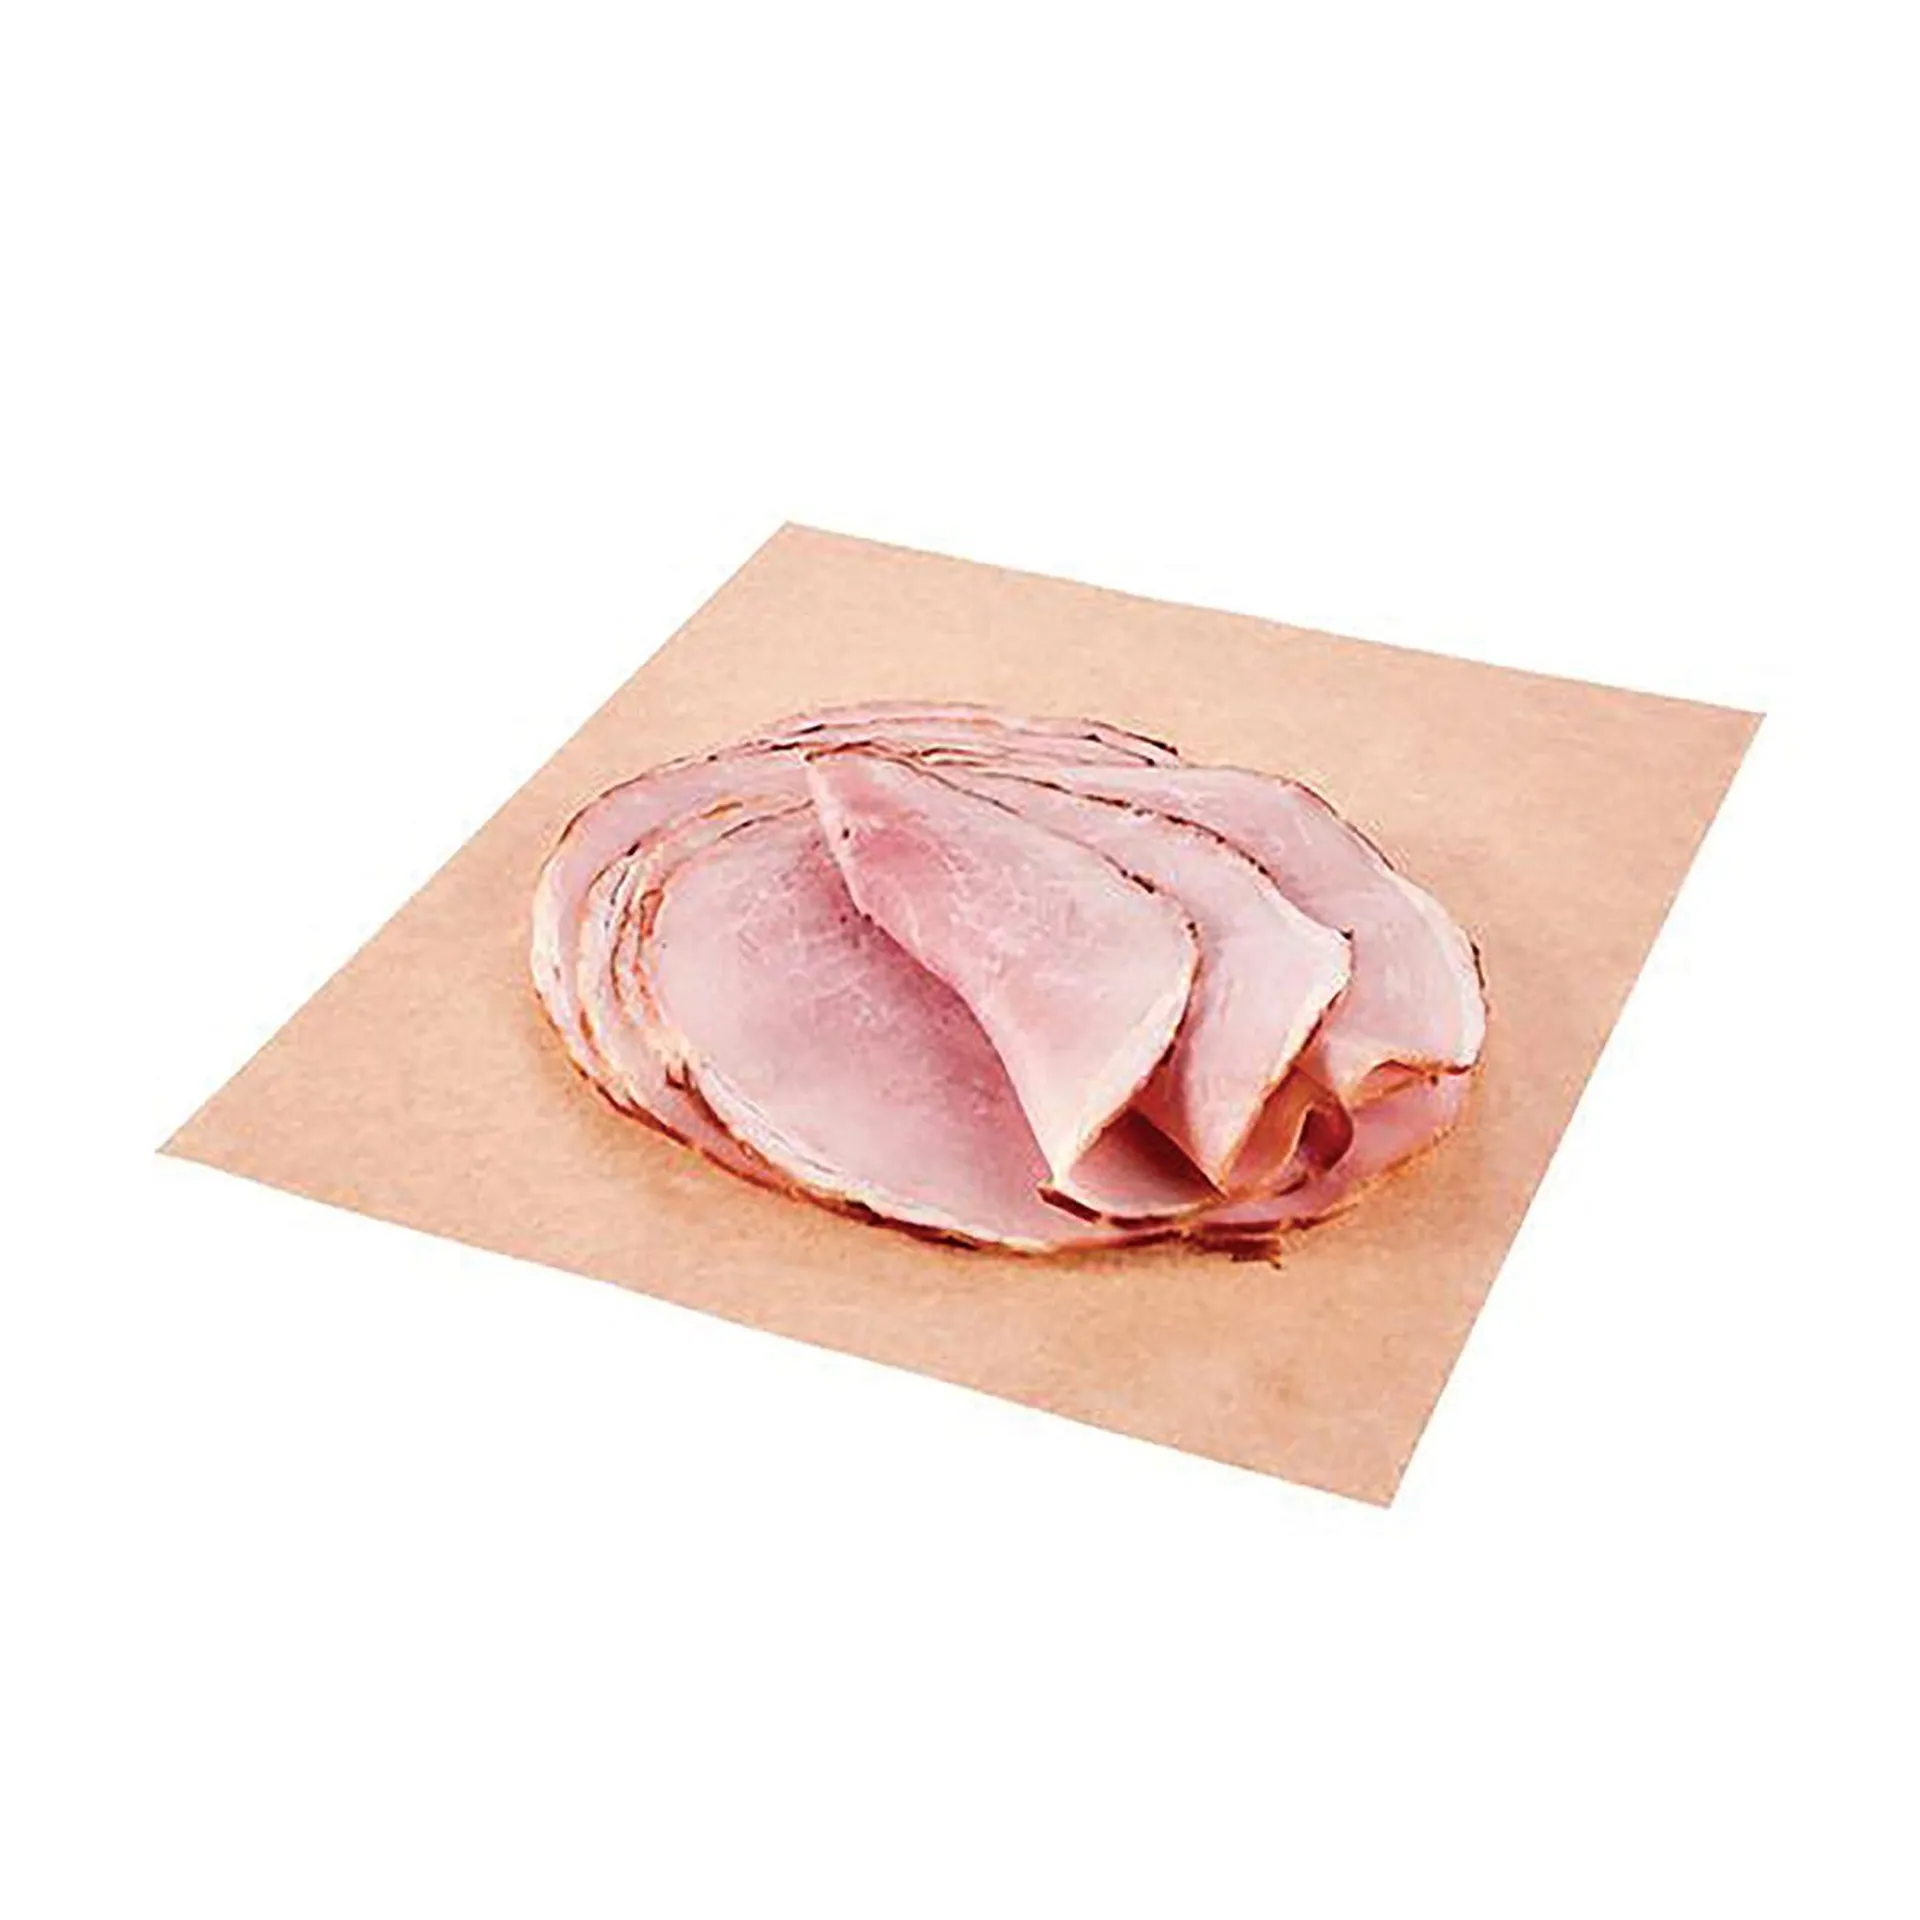 Raley's Ham, Sliced Off the Bone